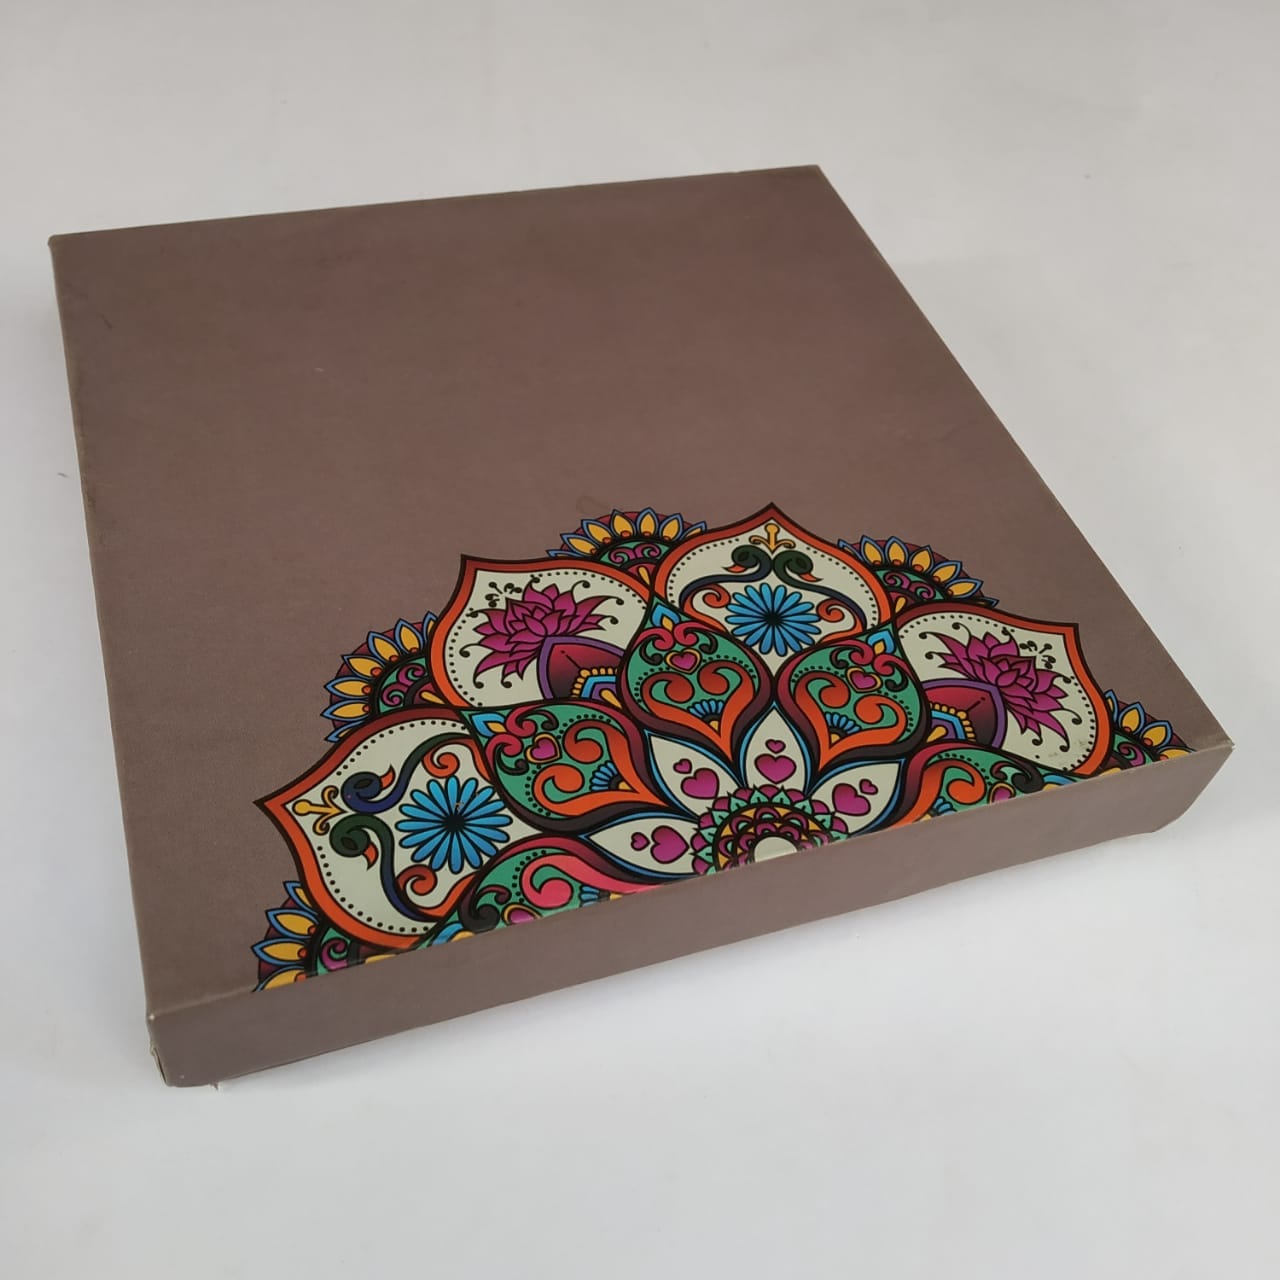 vivara prashant Hamper Supplies Decorative Box for Gifting, Storage, and Hampers - Pack of 1, 6x6x1 Inch